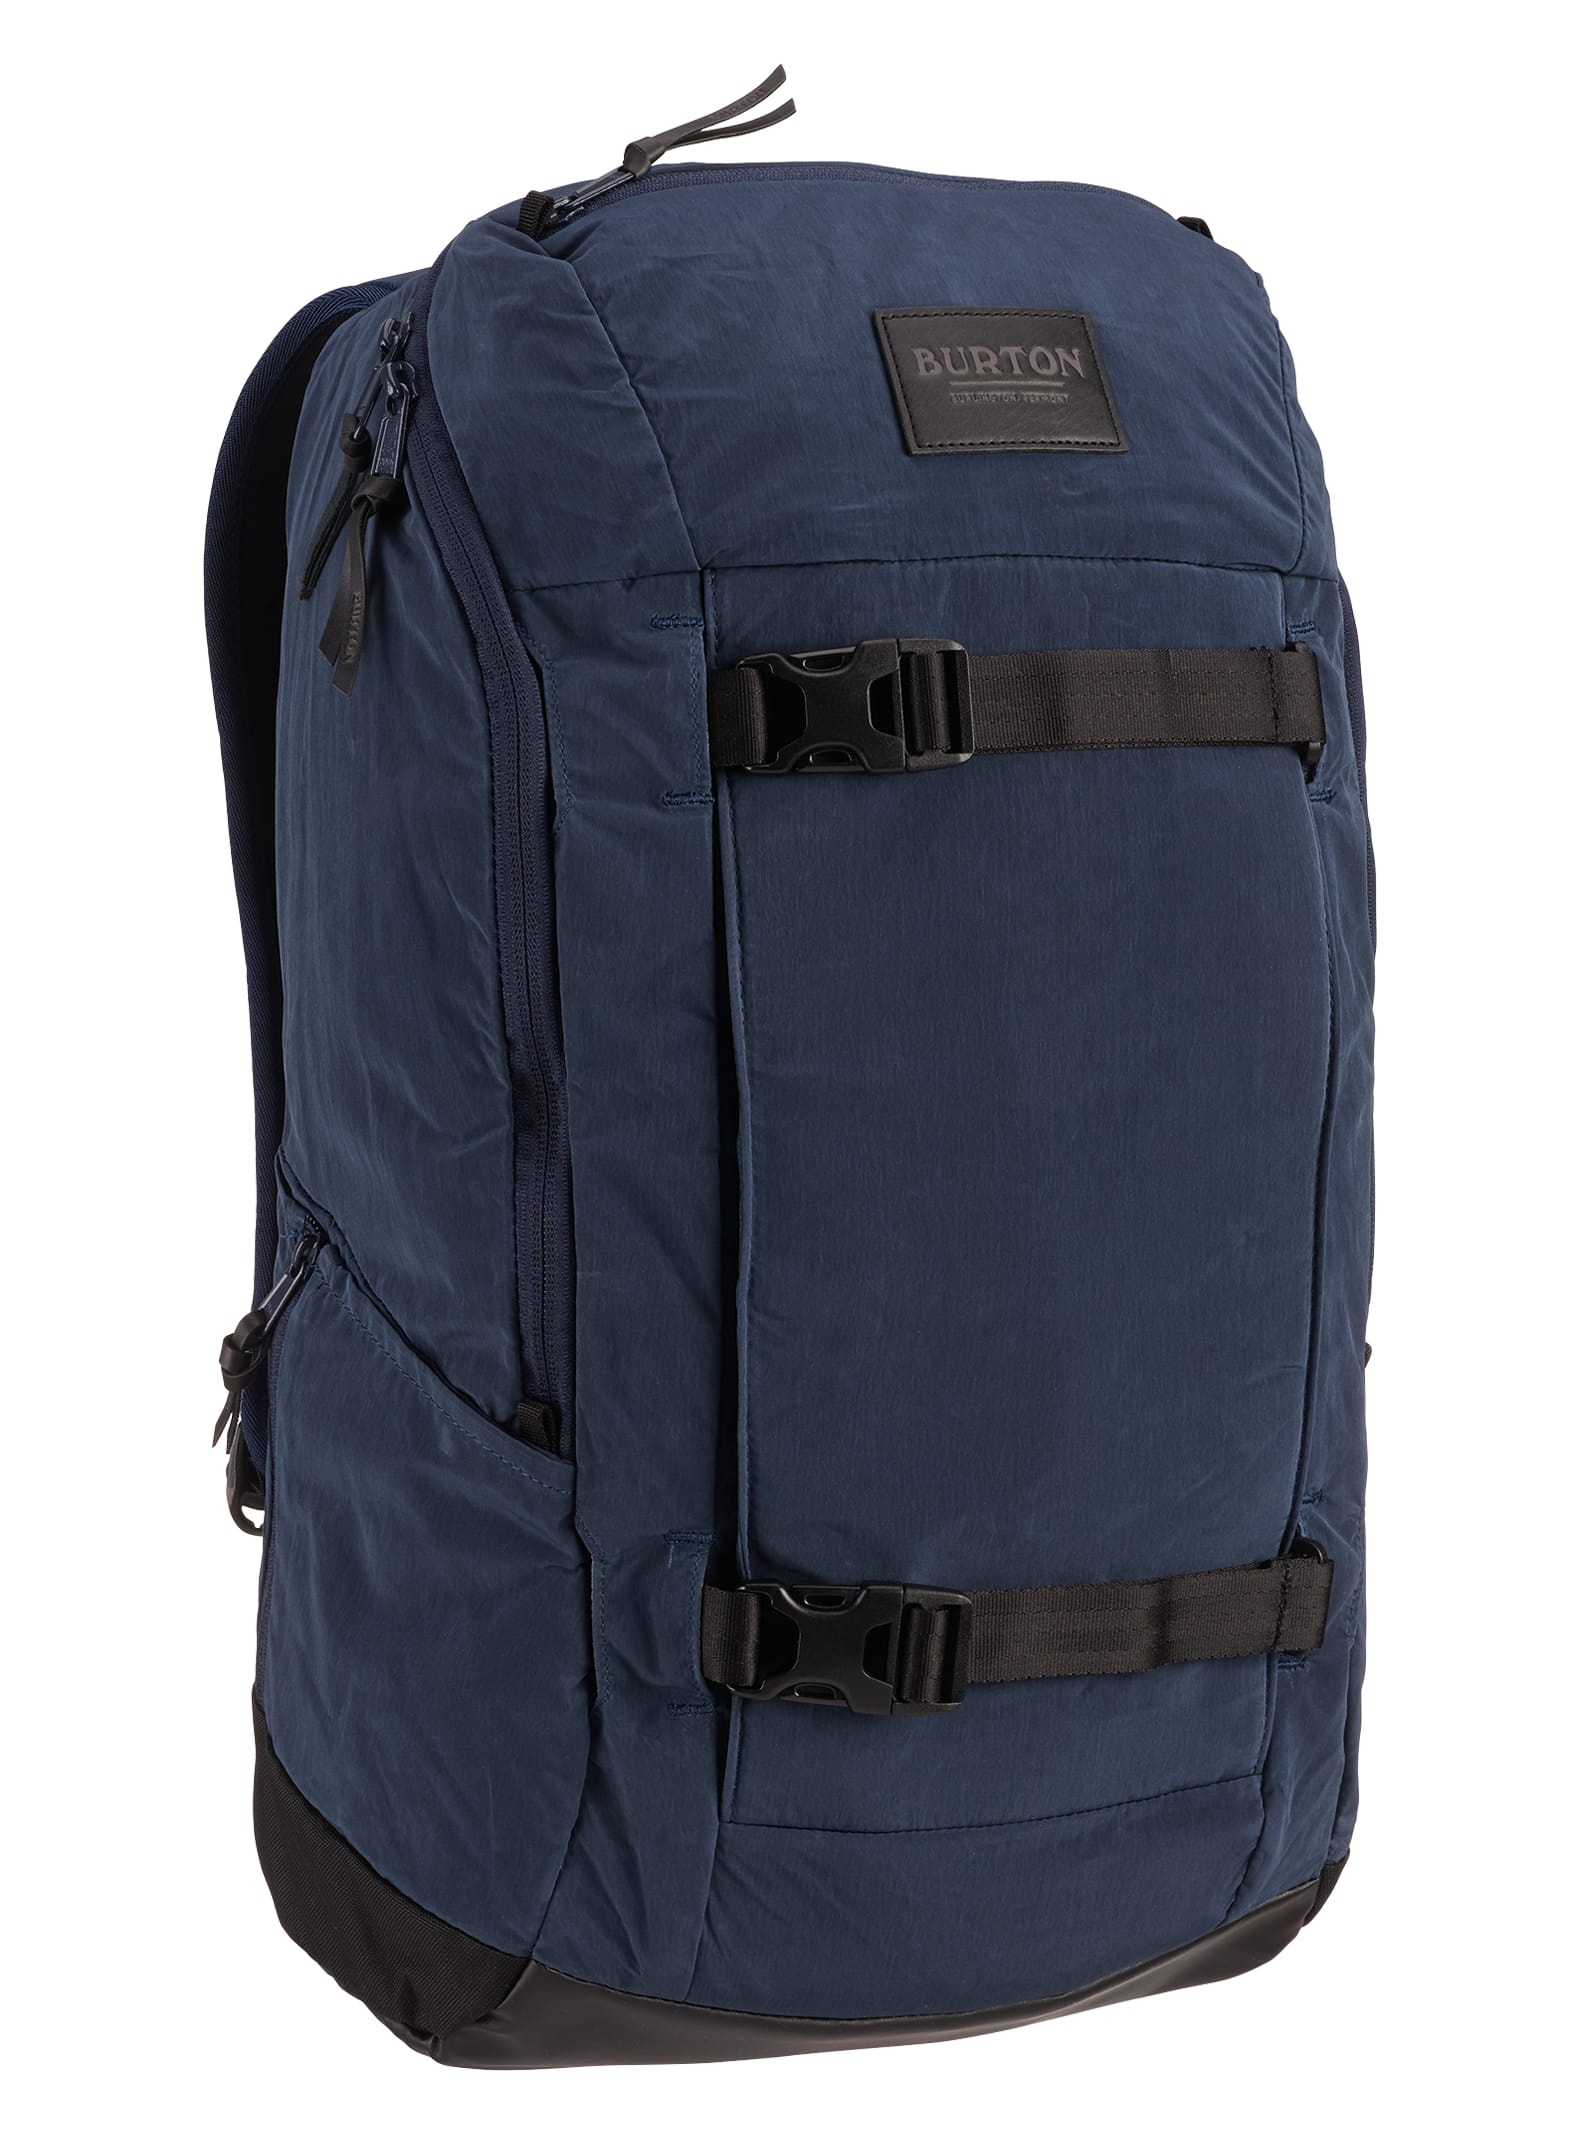 Burton Kilo 2.0 27L Backpack | Burton.com Spring 2020 HU